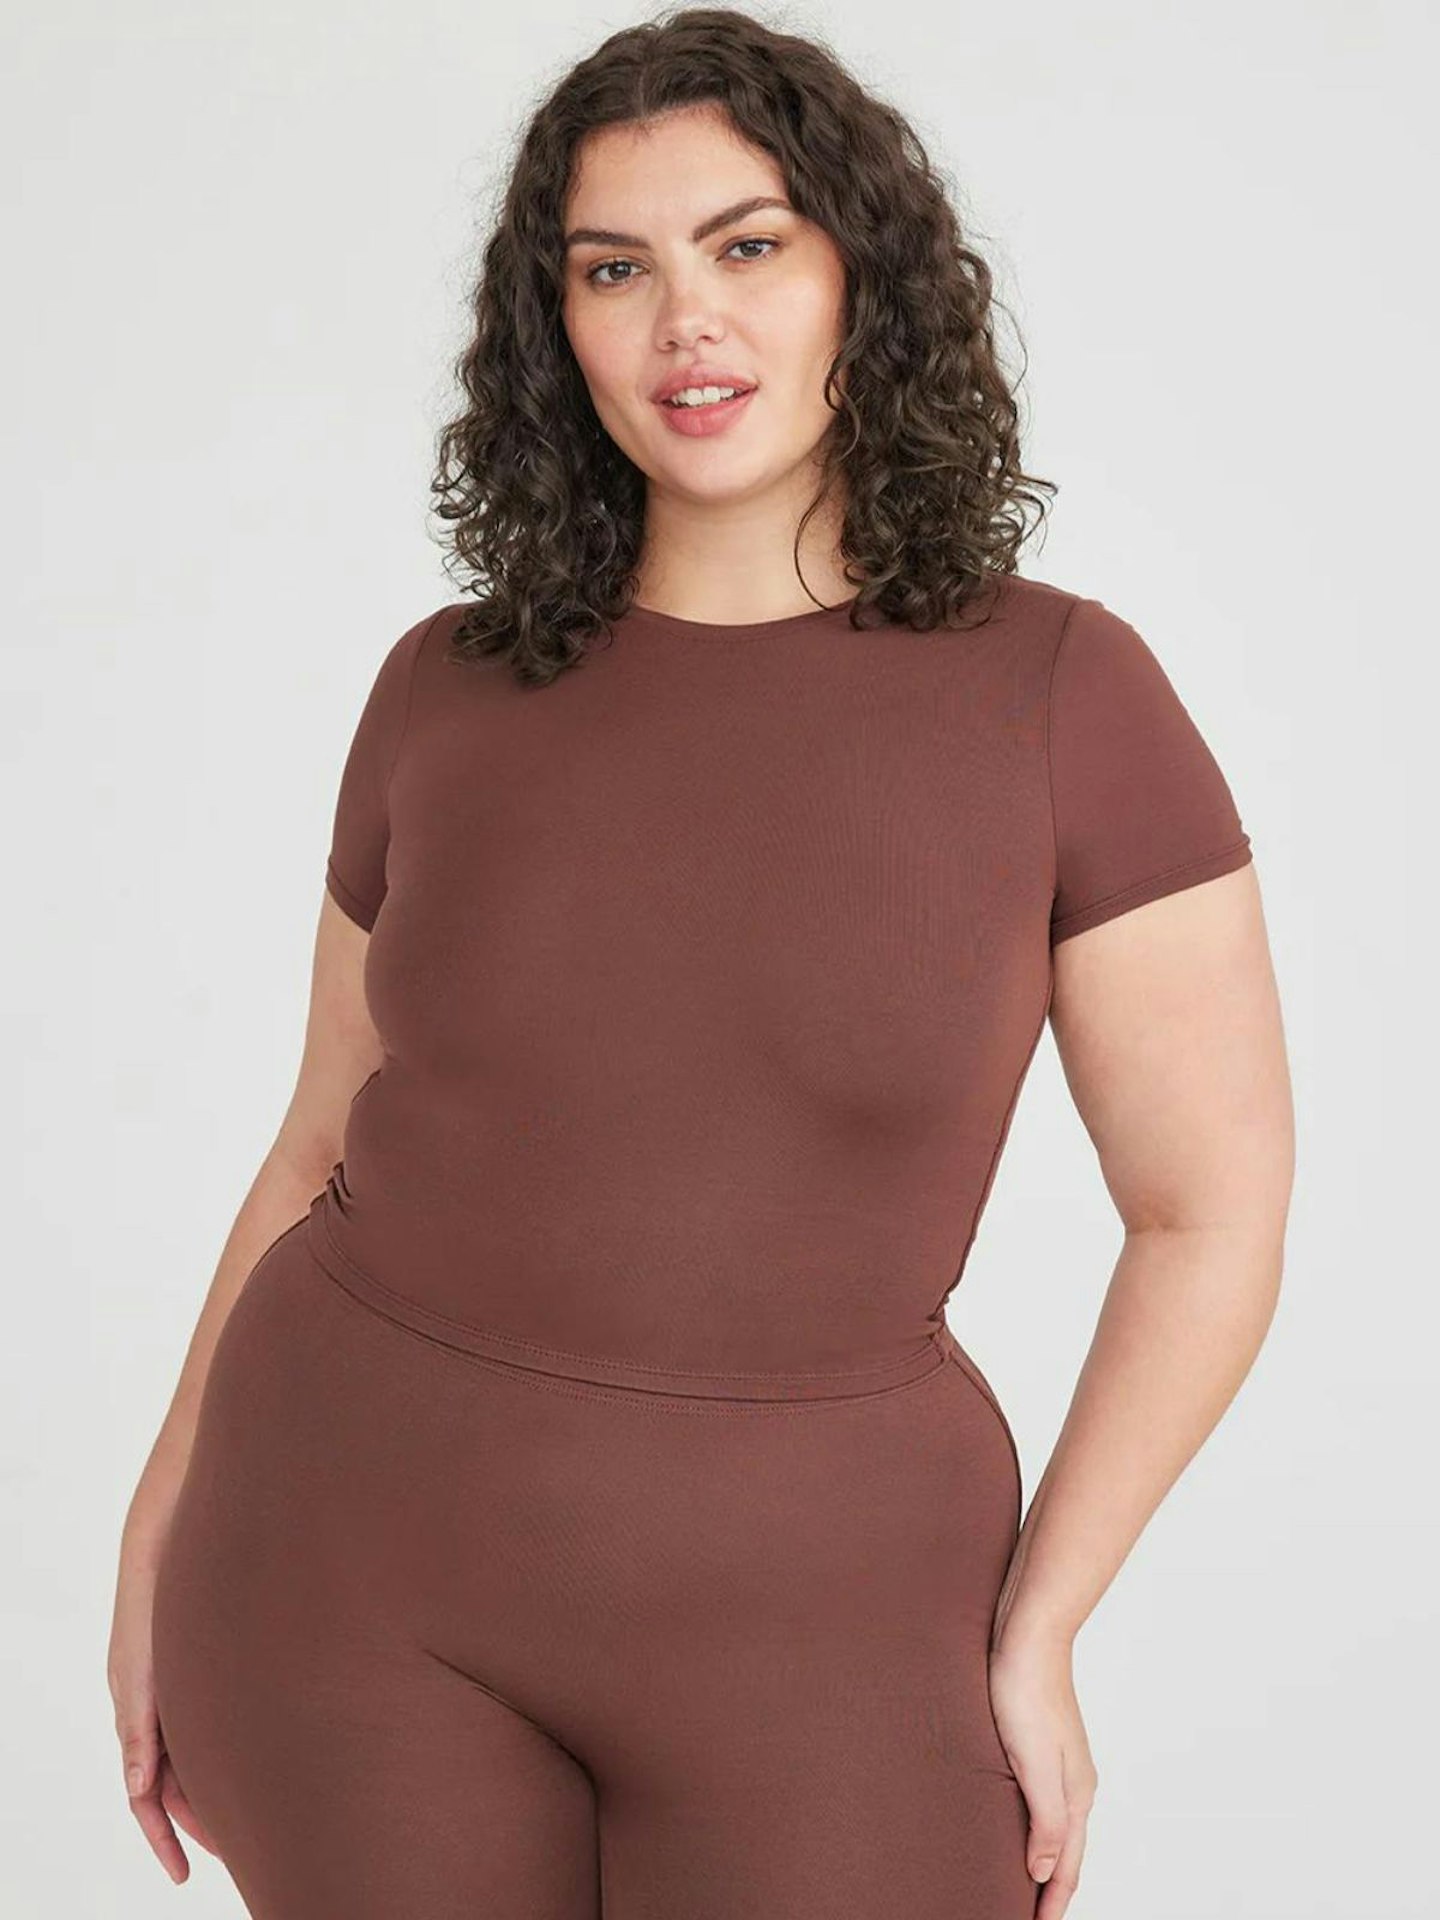  Womens Maternity Bodysuit Pregnancy Shapewear Sleeveless  Tank Top Shorts Romper Leotard Jumpsuit For Photoshoot Work Brown Large